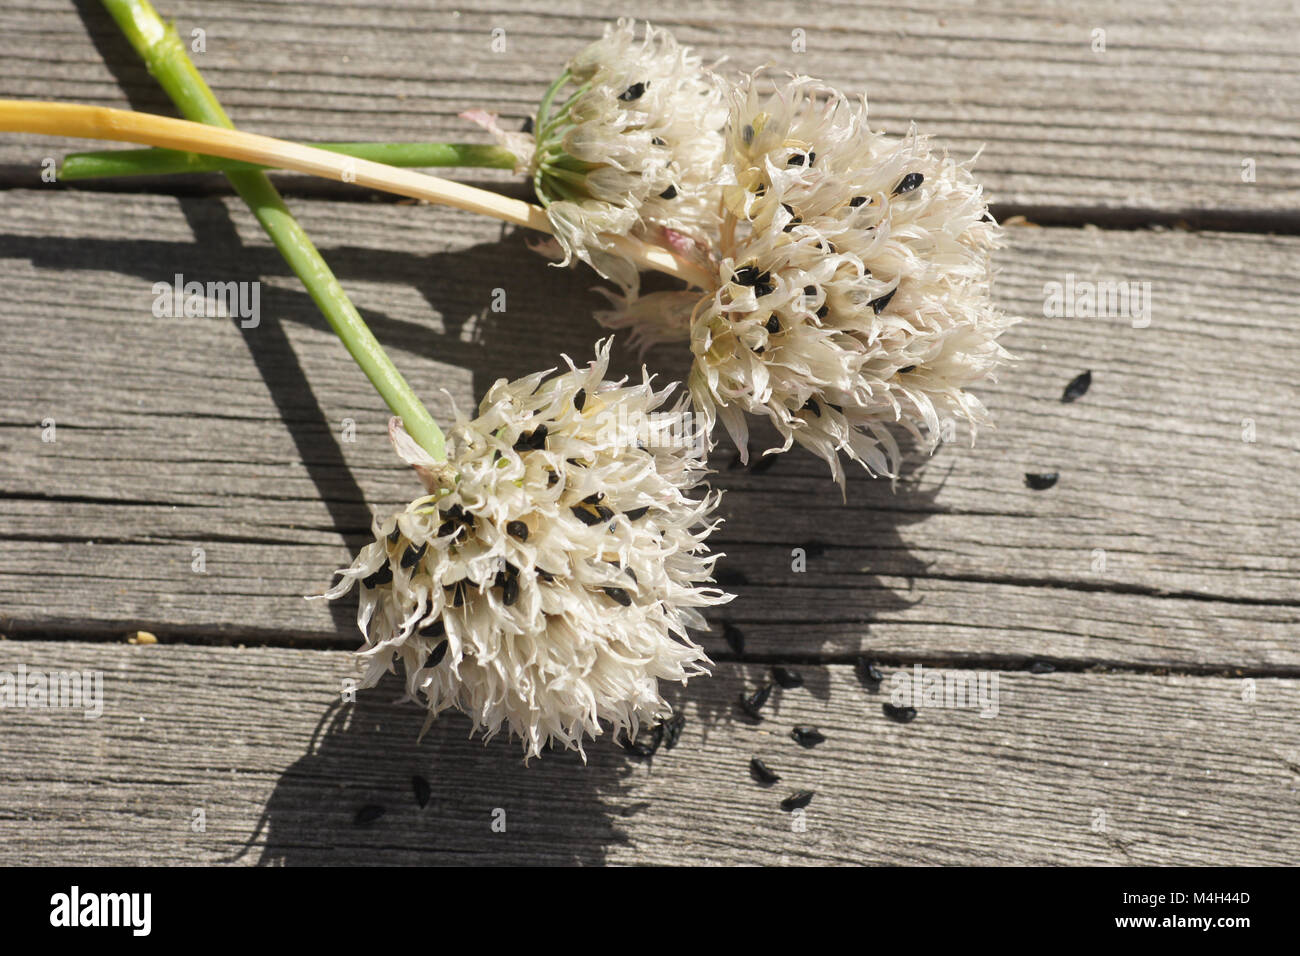 Allium schoenoprasum, chive, seed stem Stock Photo